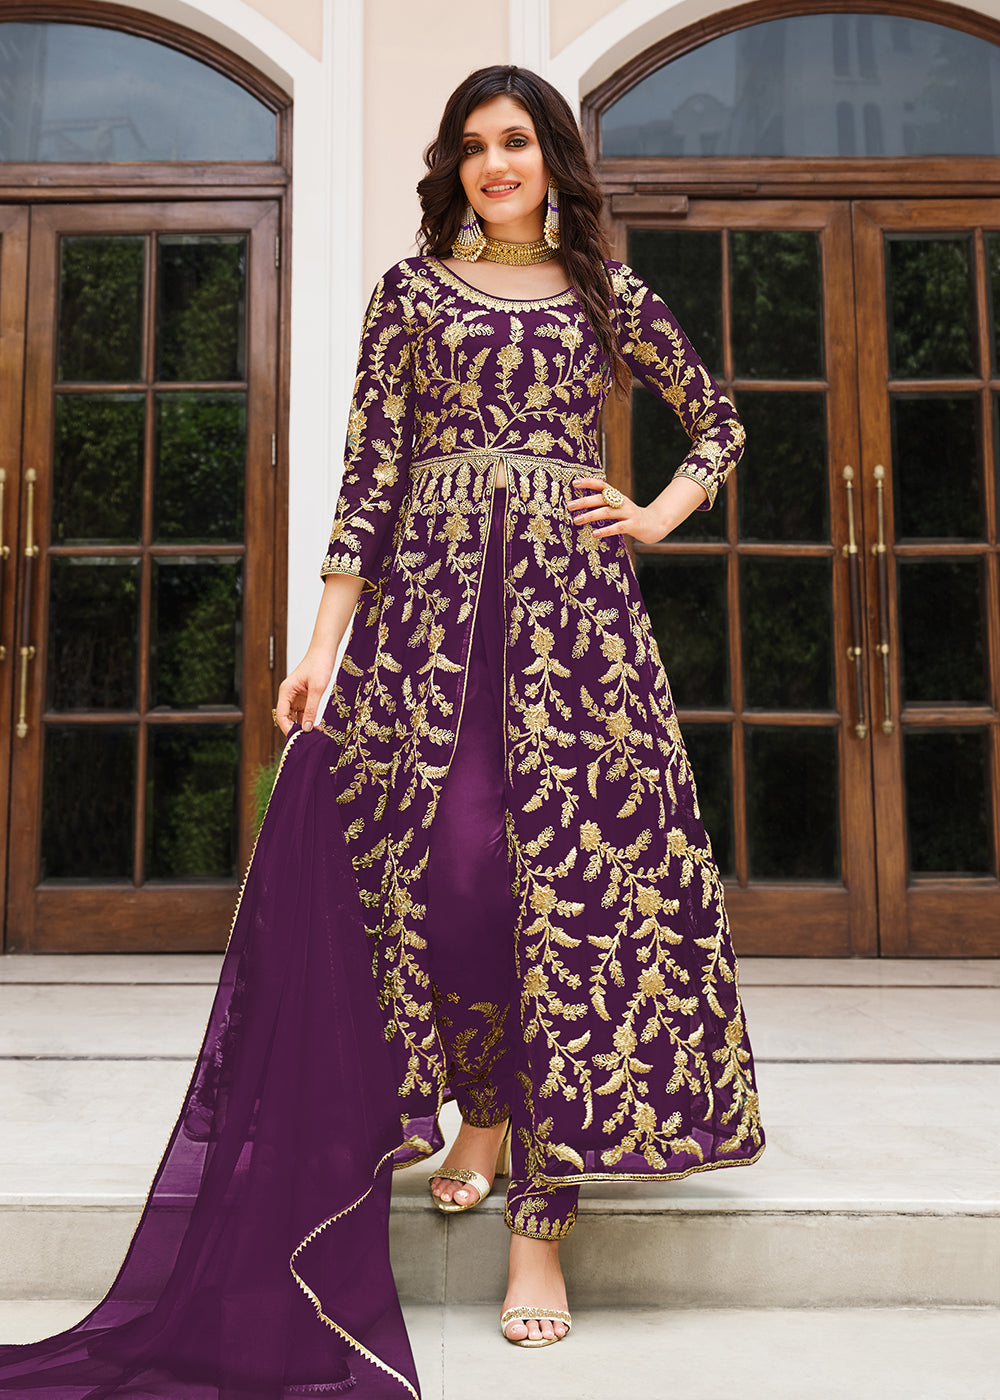 Buy Now Lovely Plum Purple Designer Front Slit Anarkali Dress Online in USA, UK, Australia, New Zealand, Canada & Worldwide at Empress Clothing. 